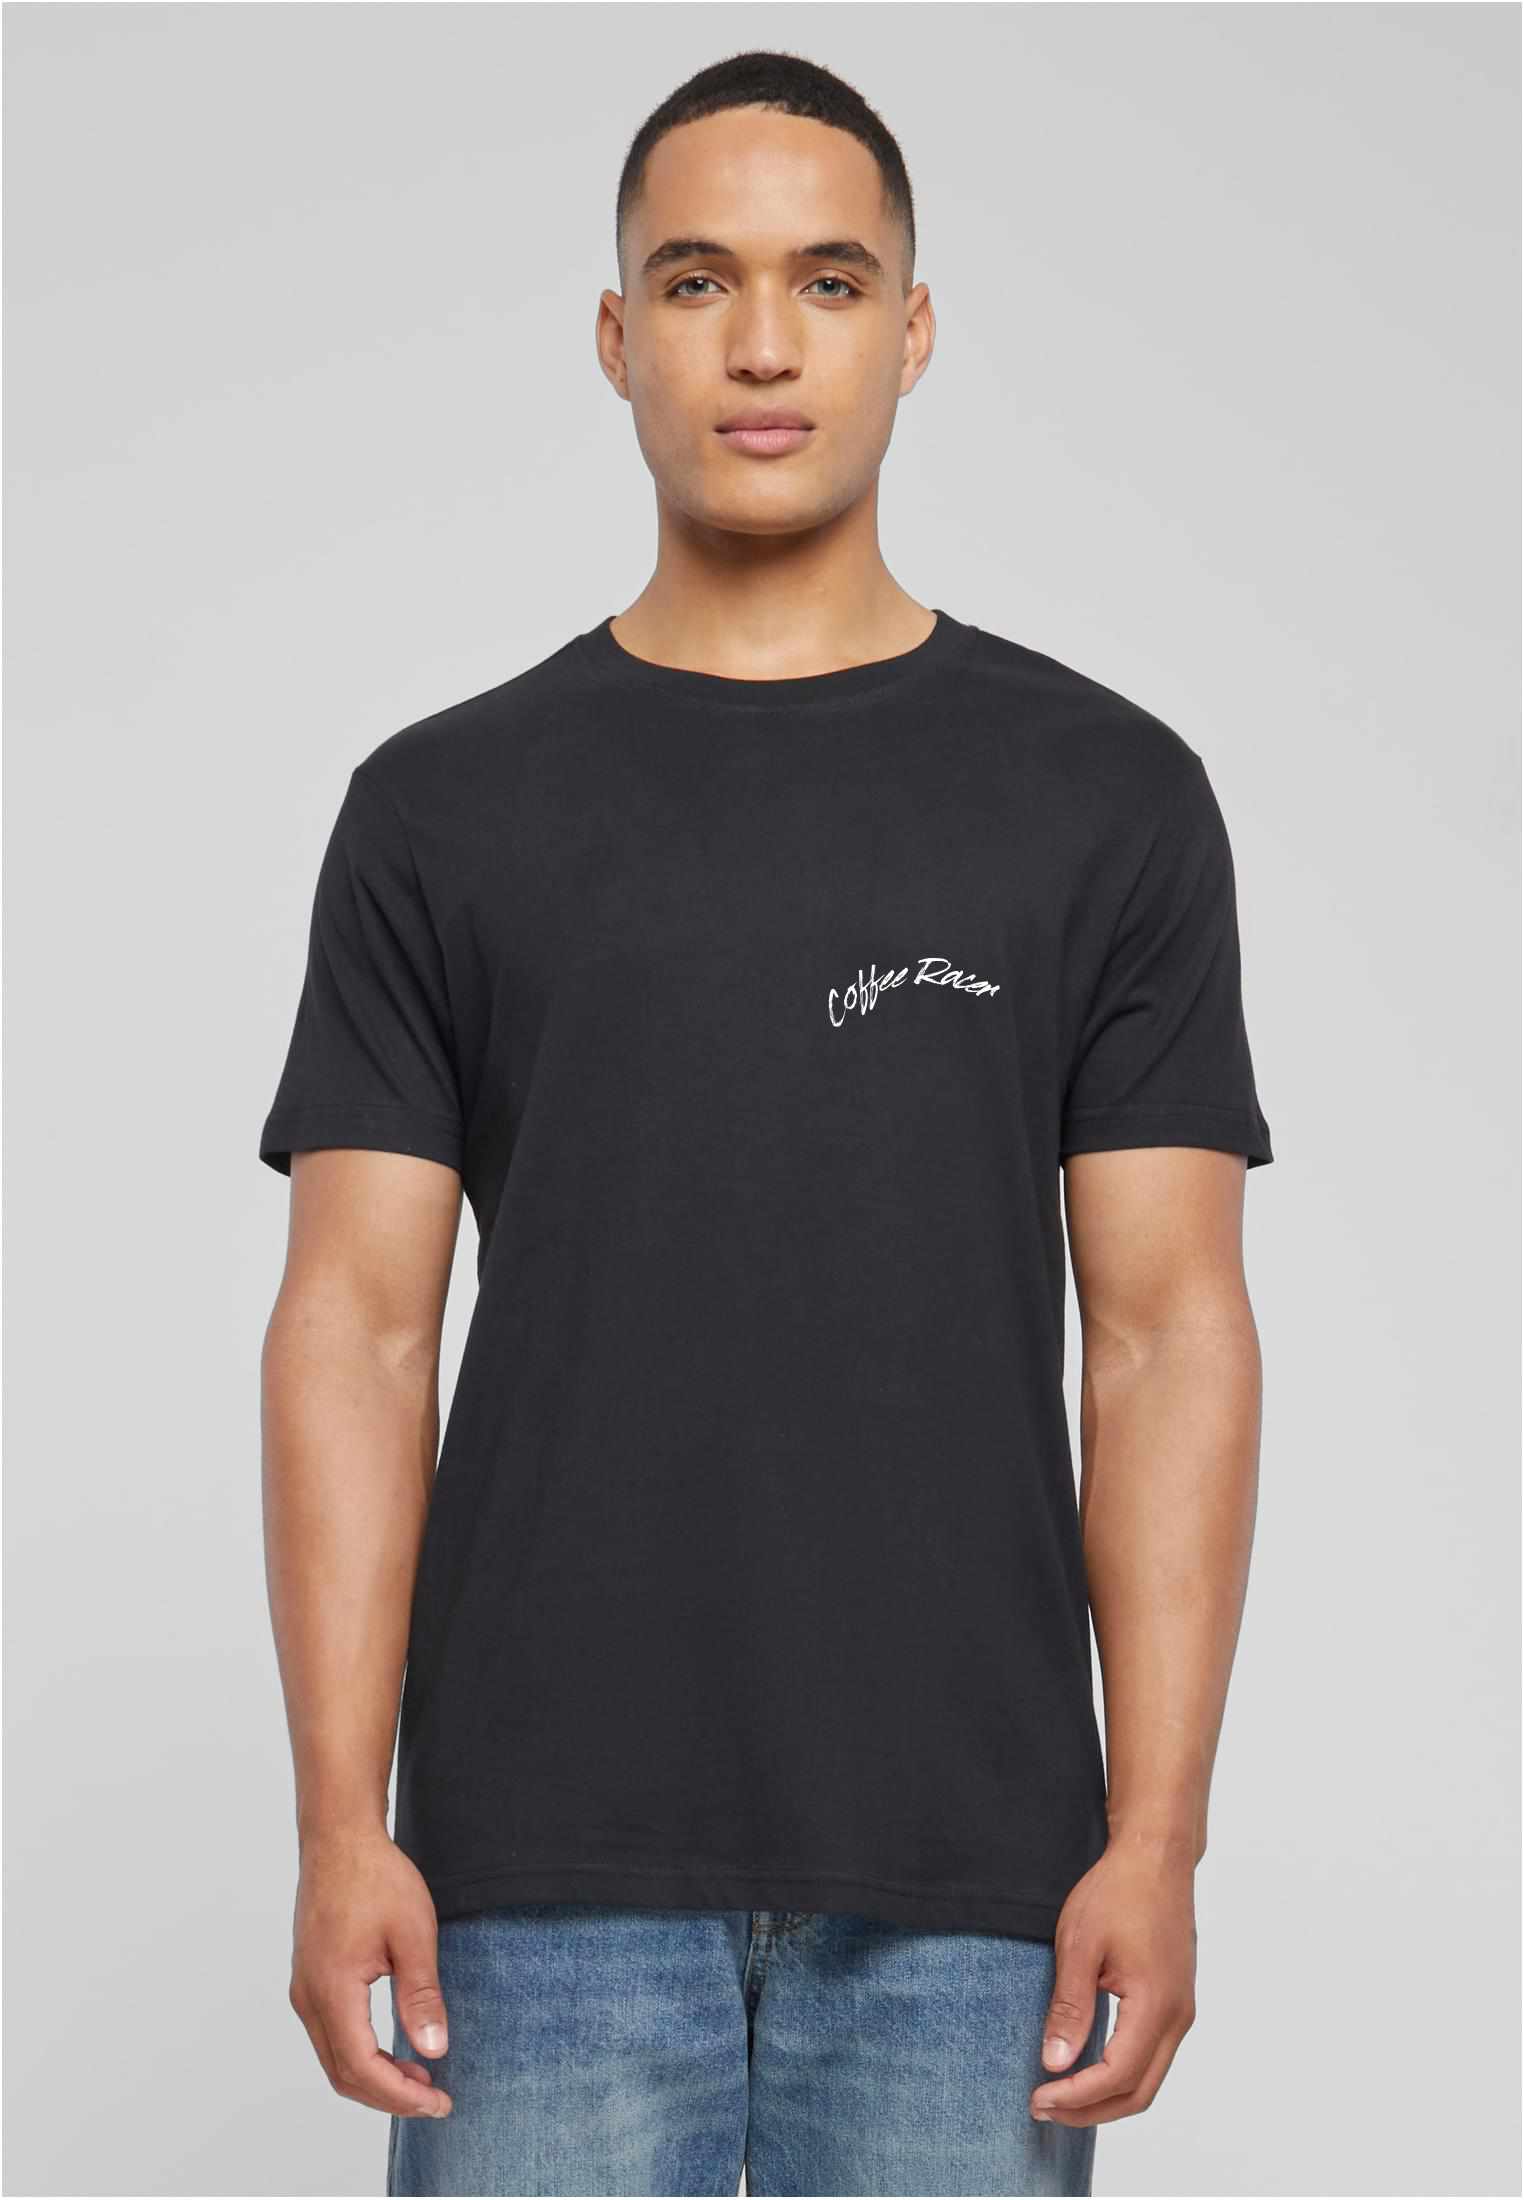 OV-Style CoffeeRacer Shirt schwarz